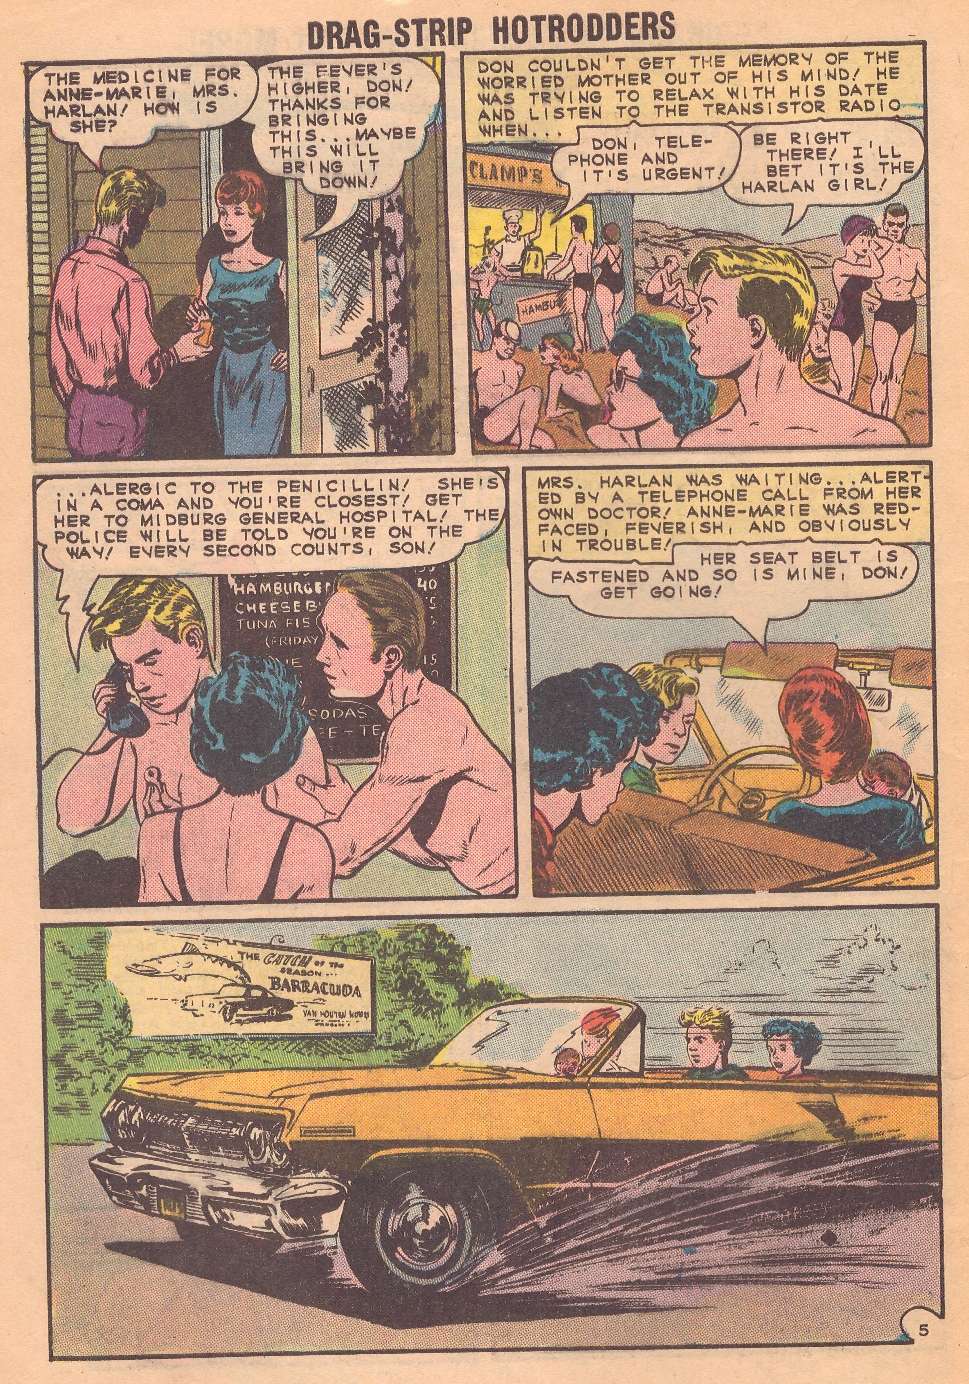 Drag-Strip Hotrodders - 60s Us Comics - January 1965 13211211